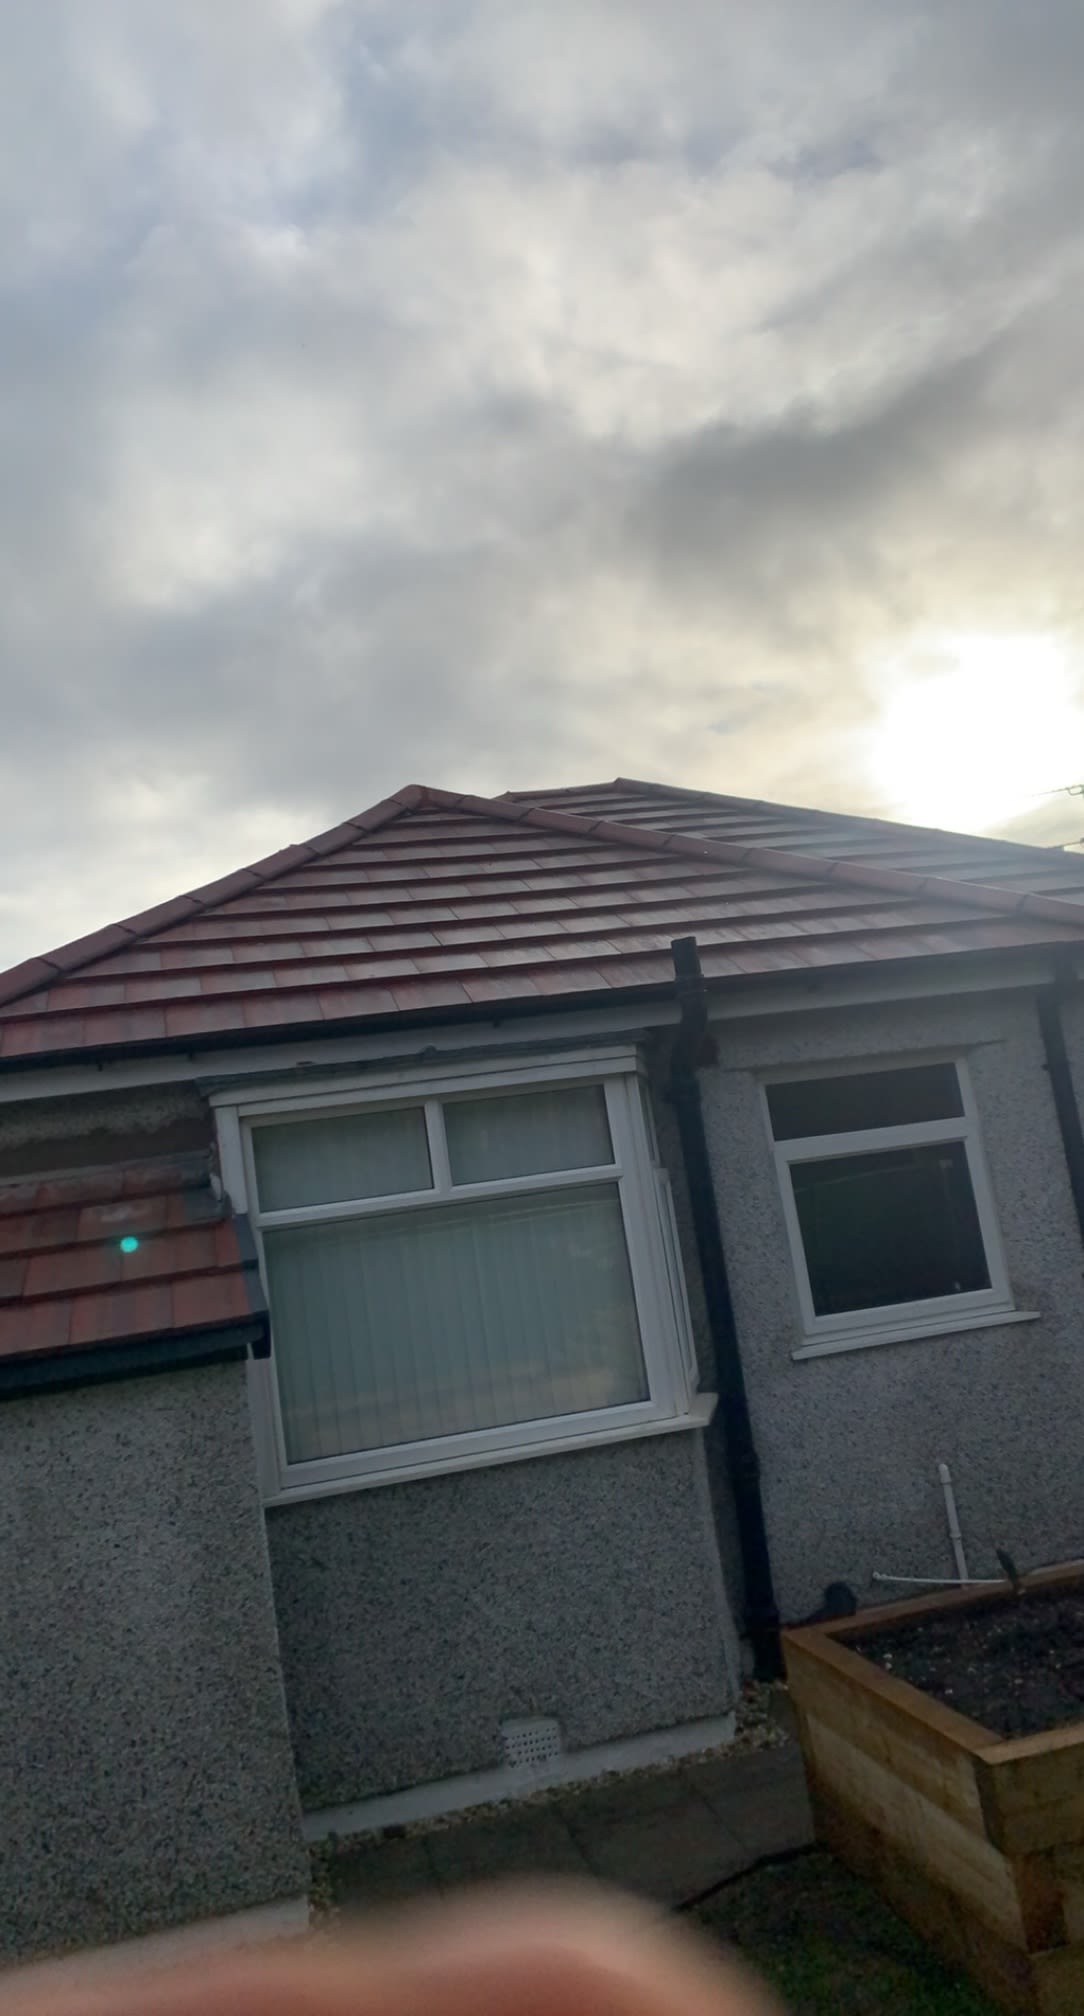 North Wales Roofing Ltd Llandudno 07870 912815